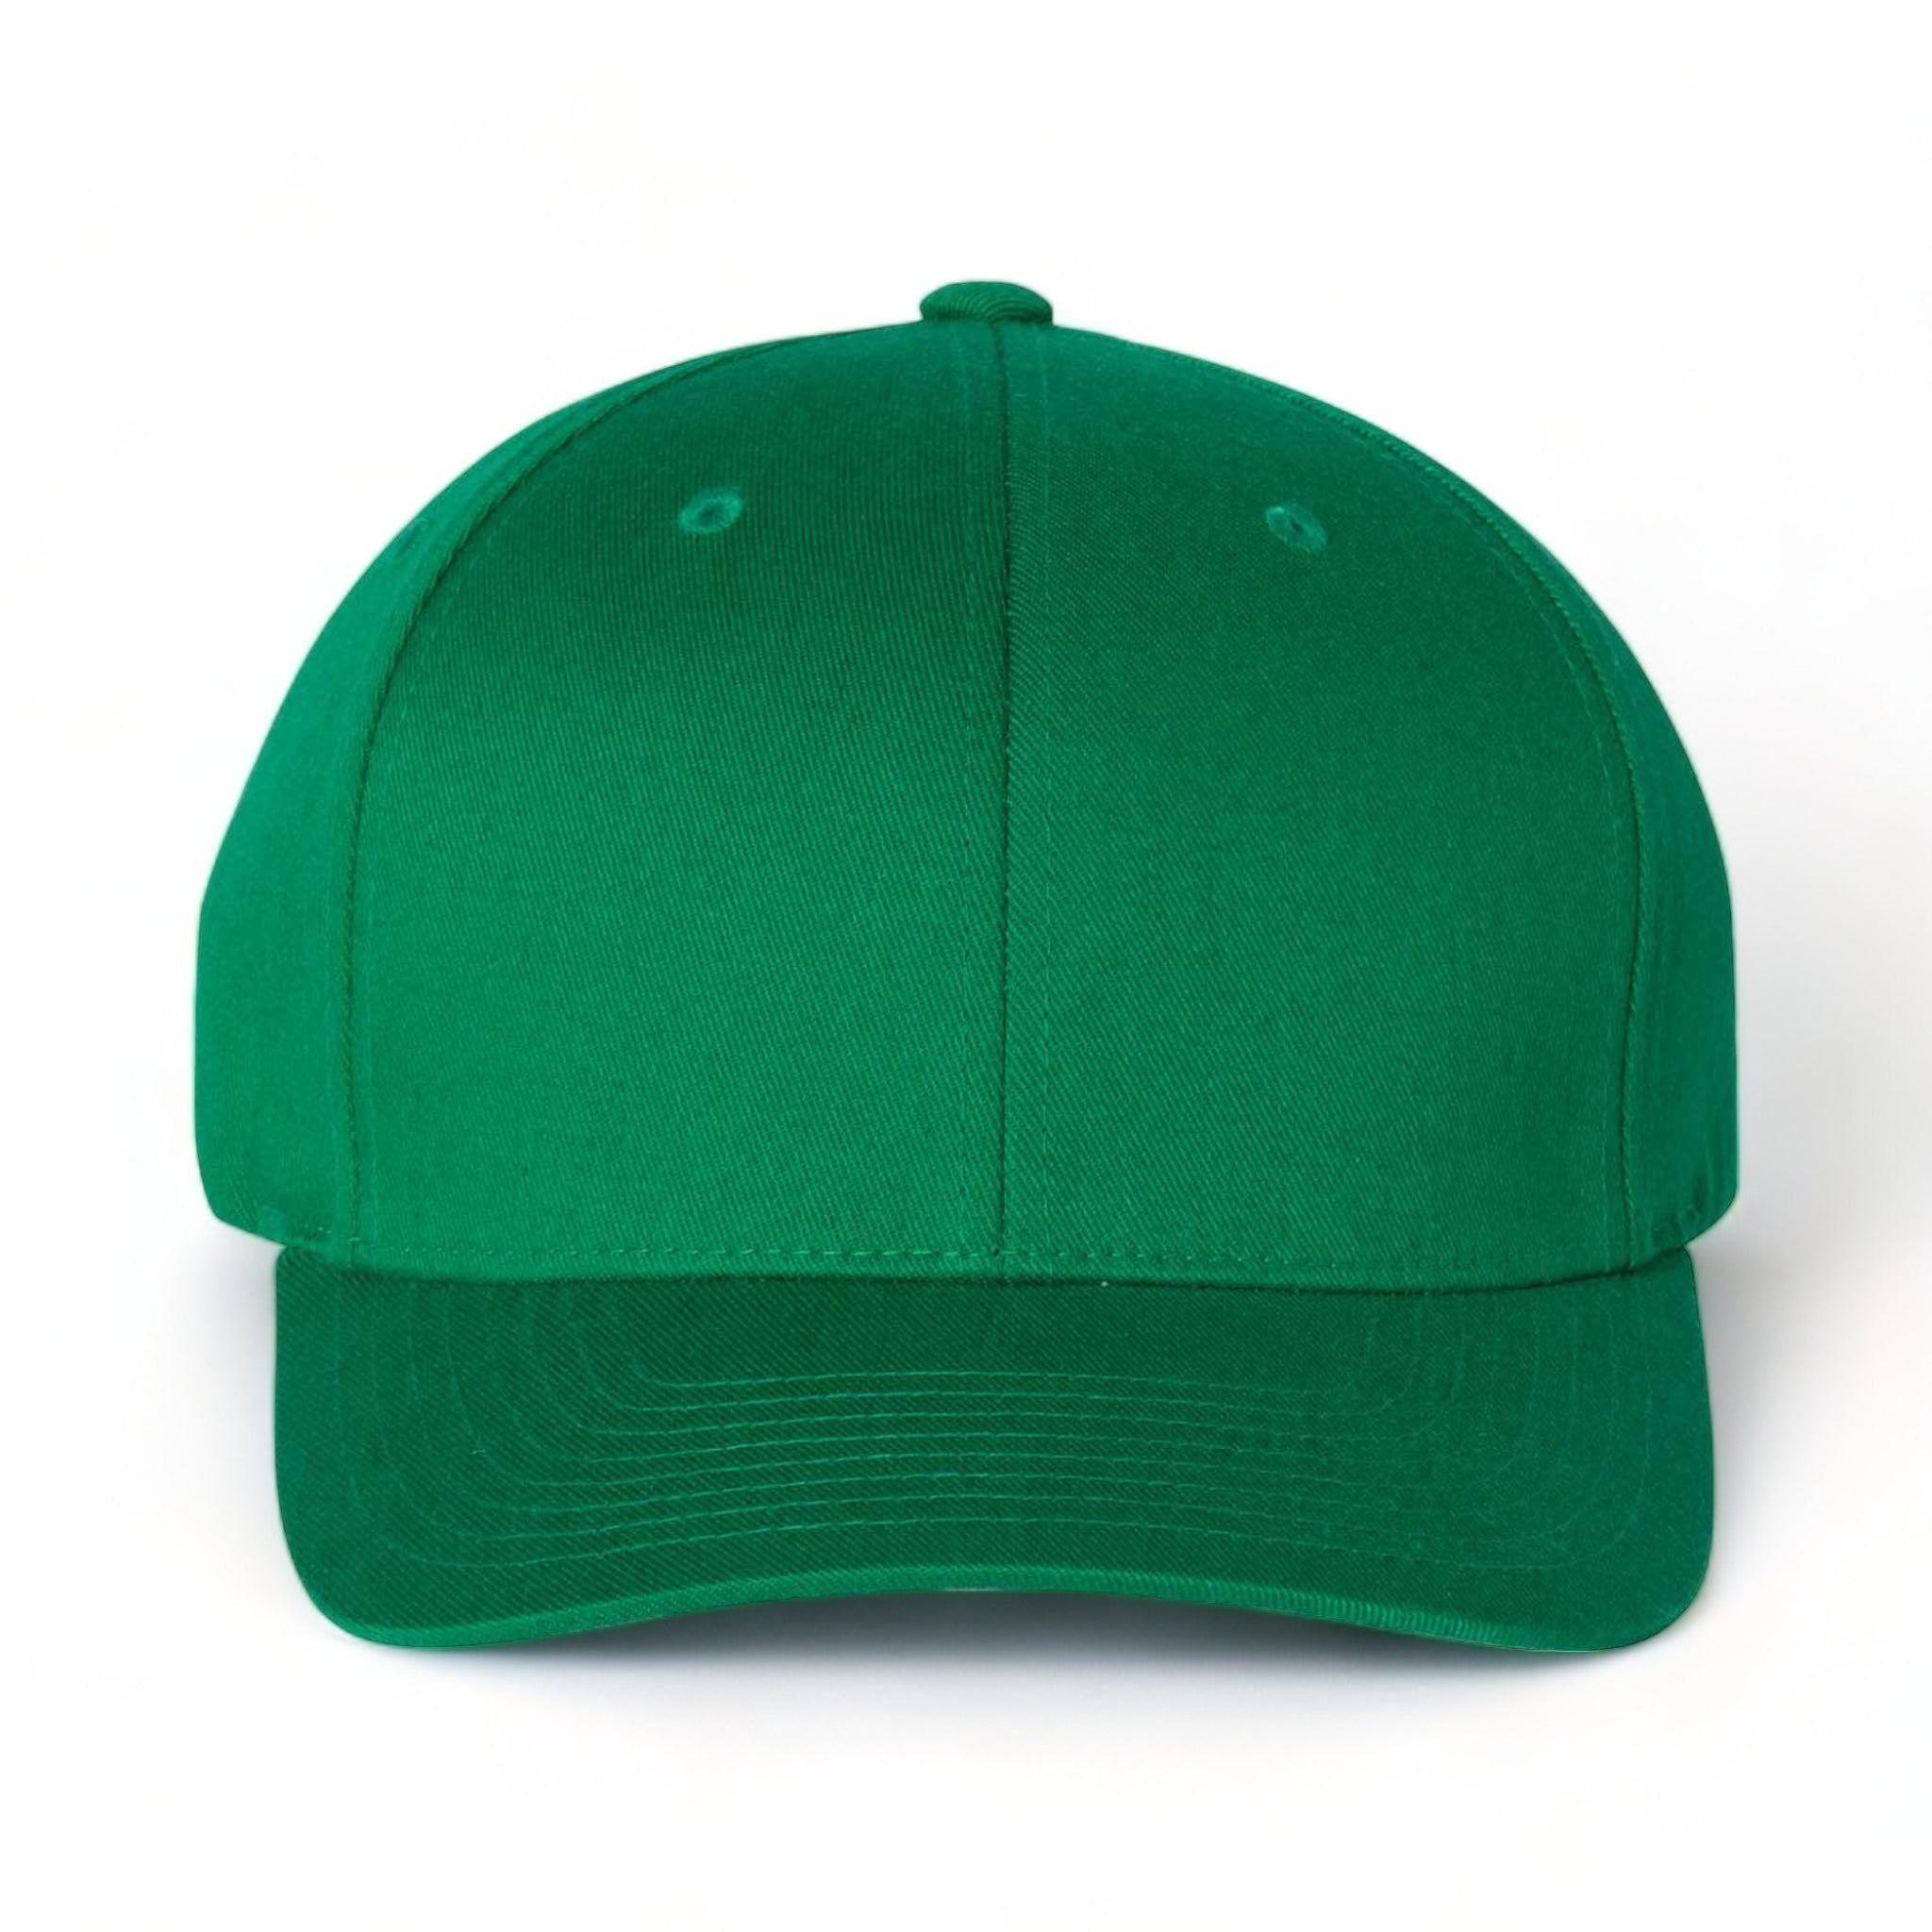 Front view of Flexfit 6277 custom hat in pepper green